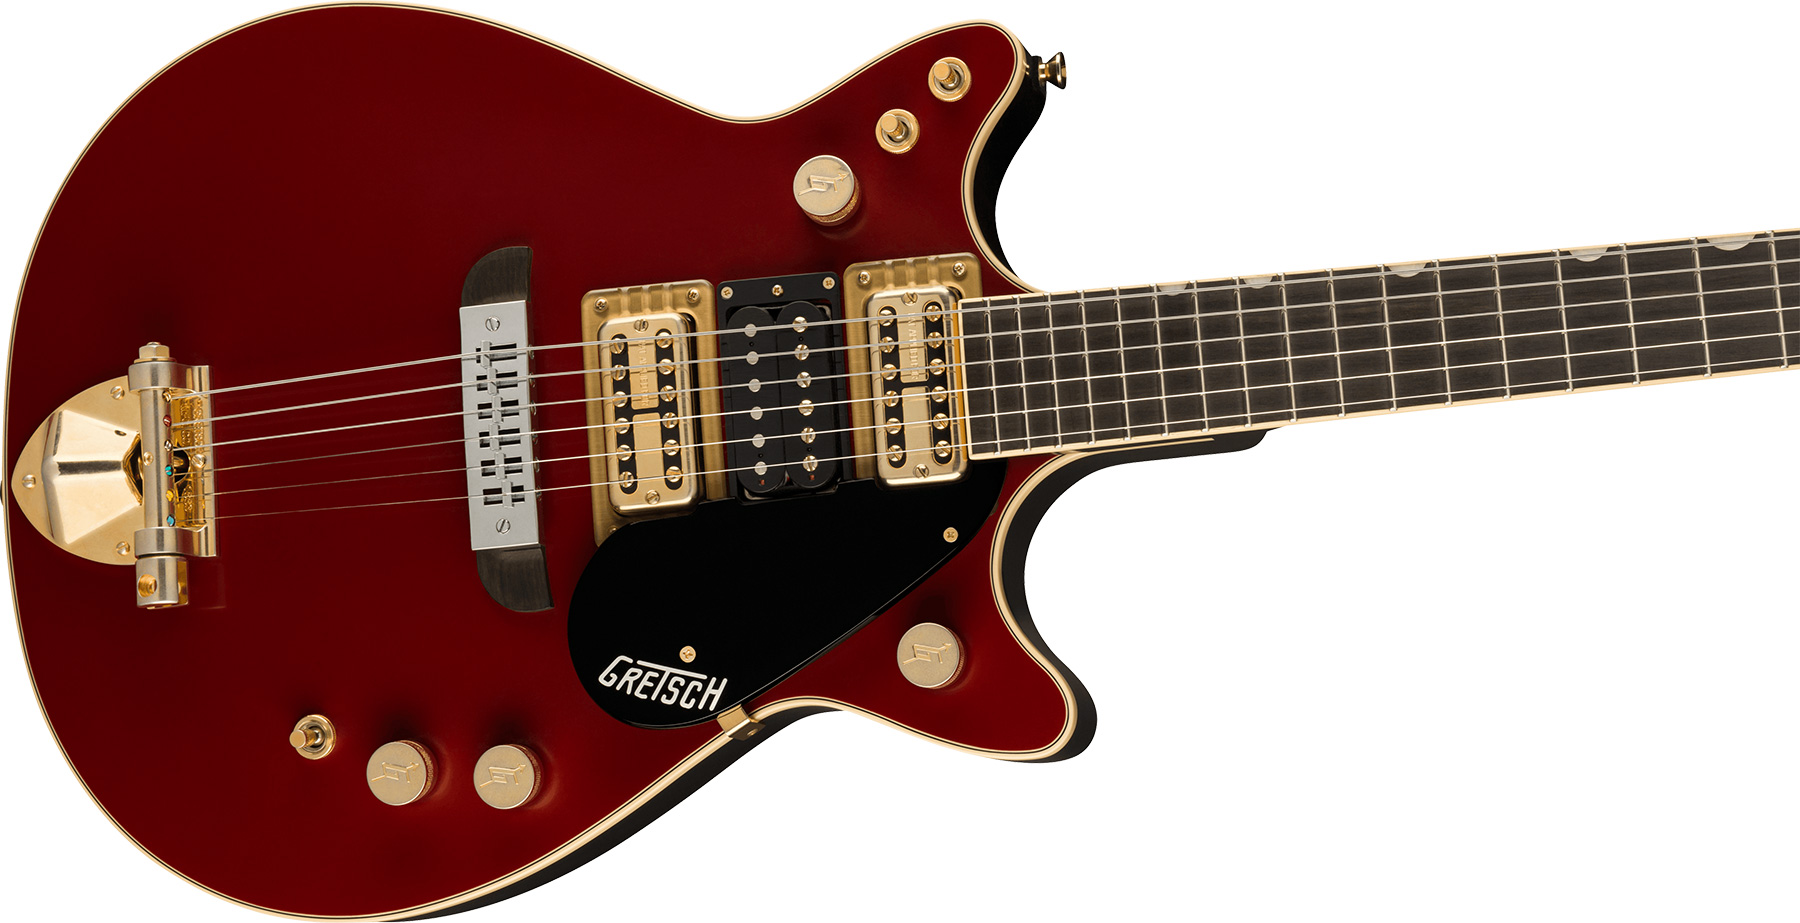 Gretsch Malcolm Young G6131g-my-rb Jet Ltd Signature 3h Ht Eb - Vintage Firebird Red - Guitarra eléctrica de doble corte. - Variation 2